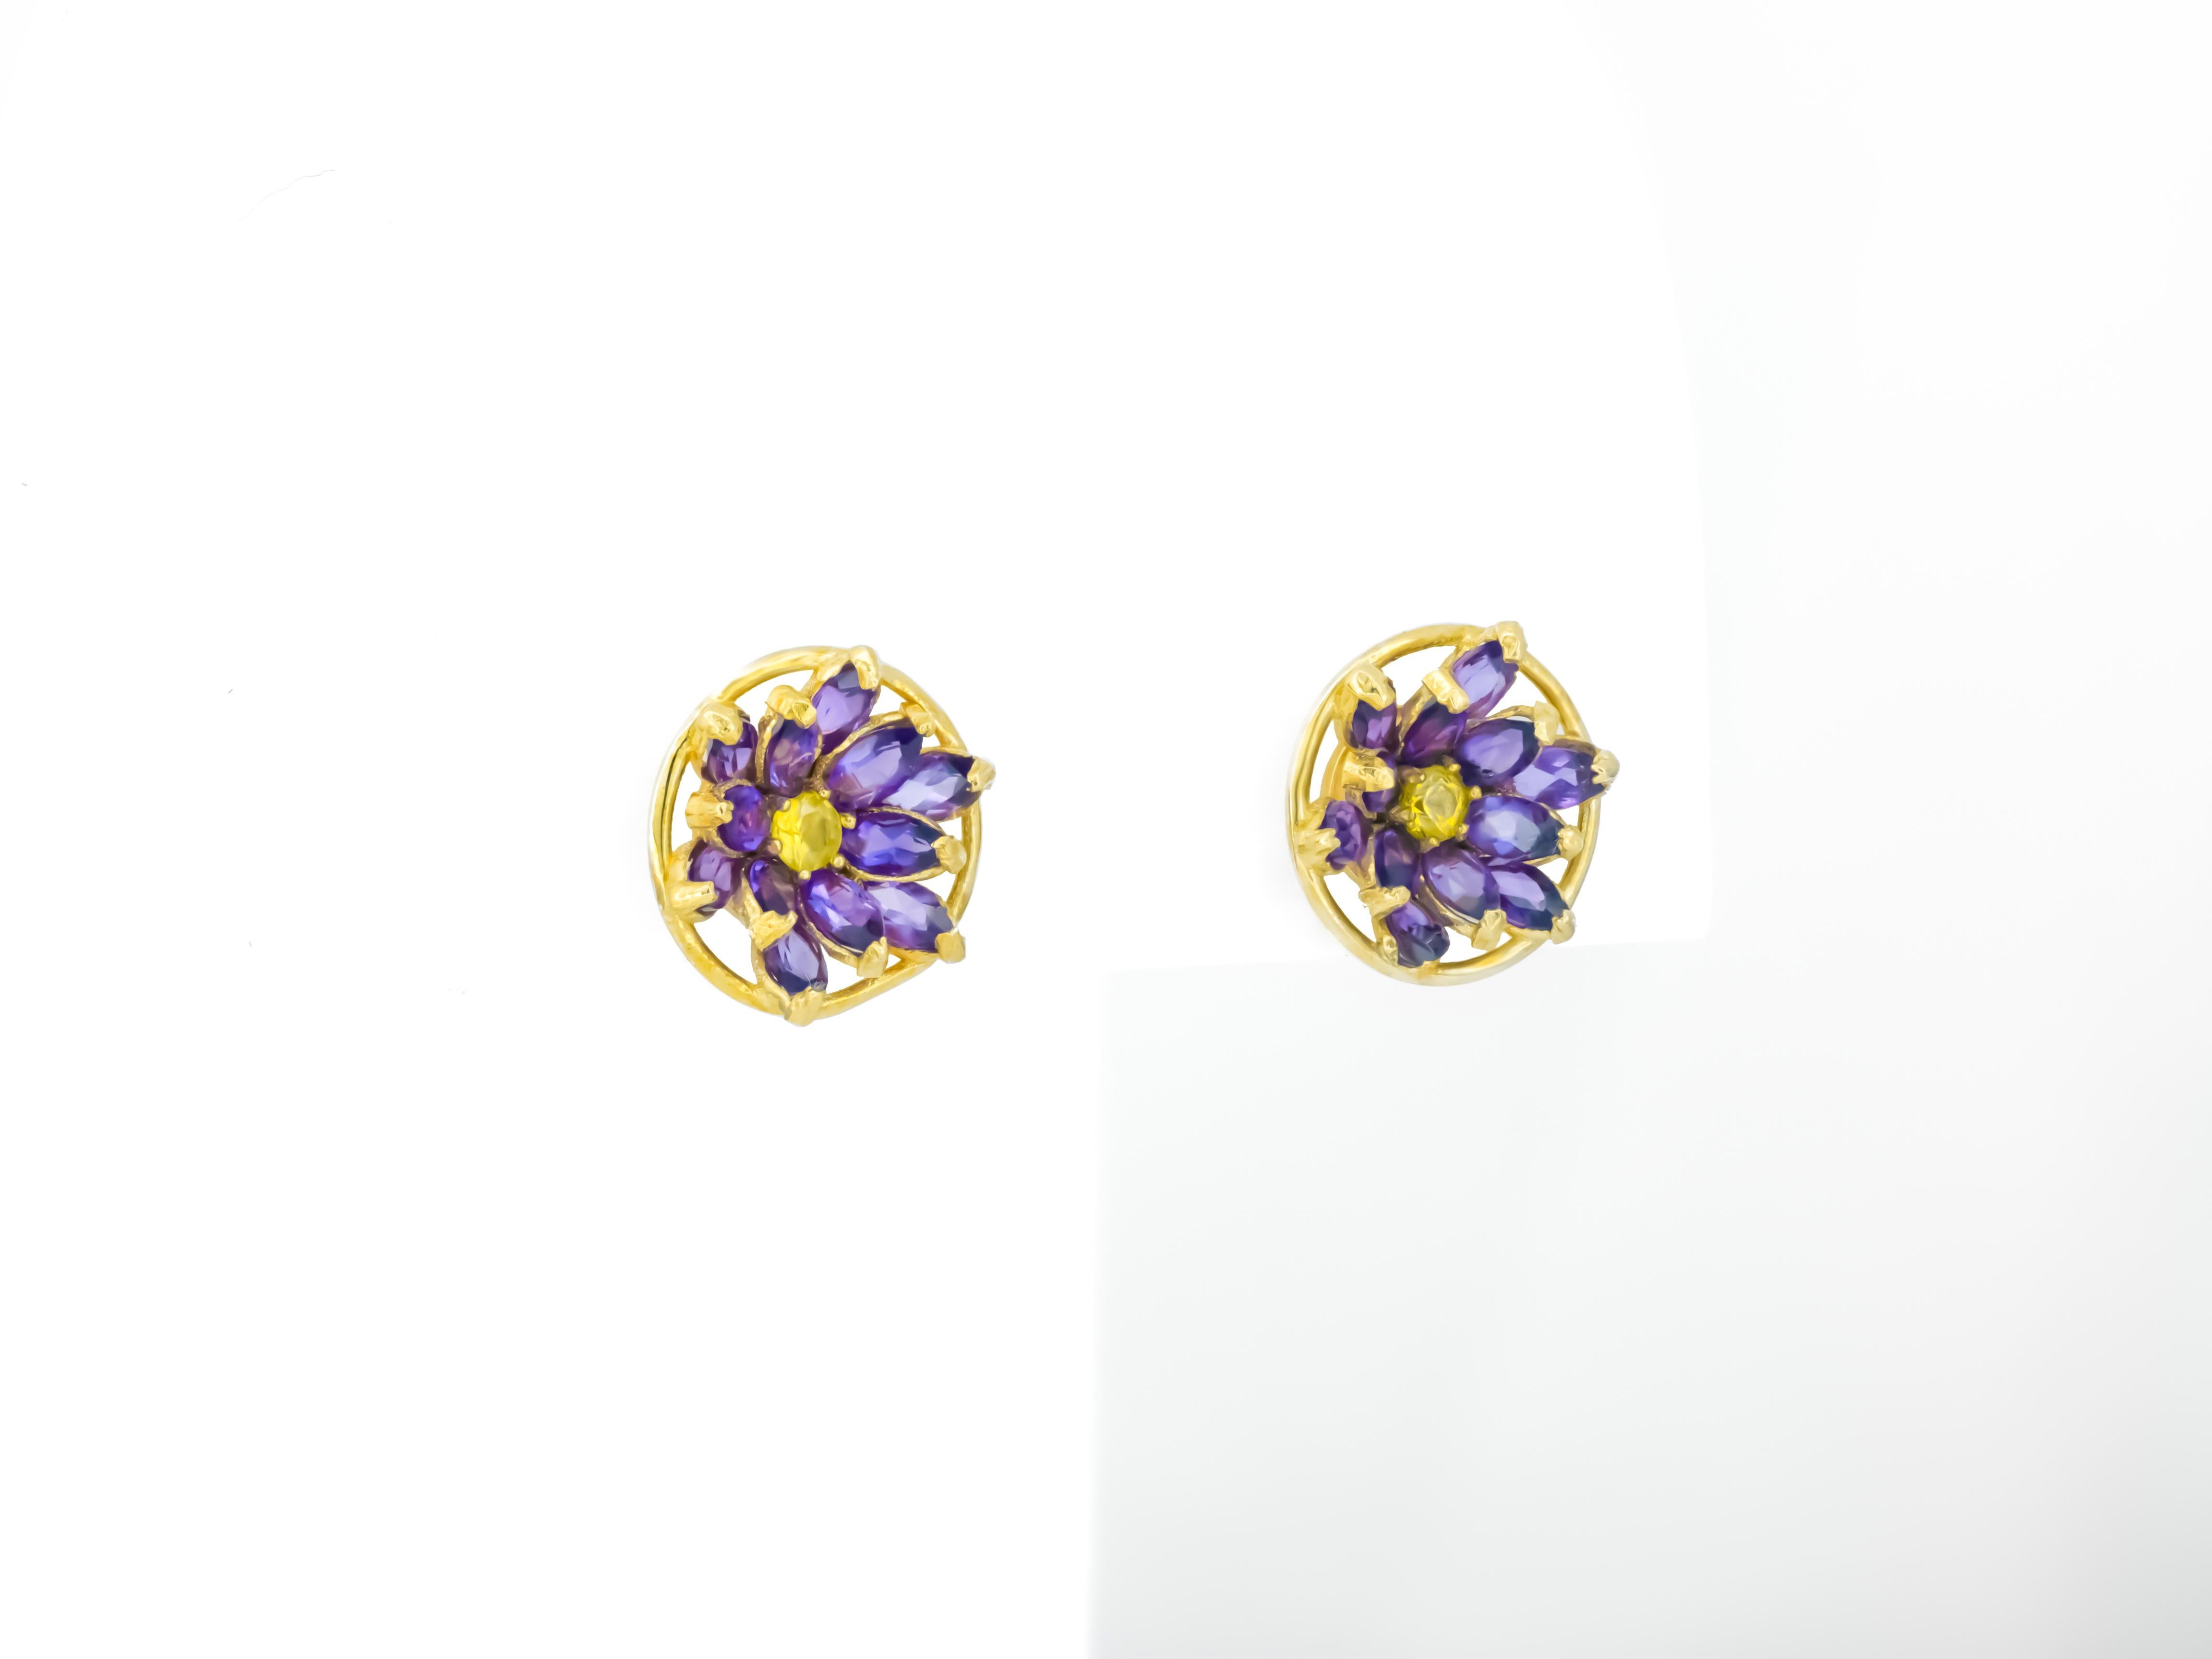 Lotus Flower Earrings Studs in 14k Gold, Amethyst and Sapphires Earrings For Sale 2